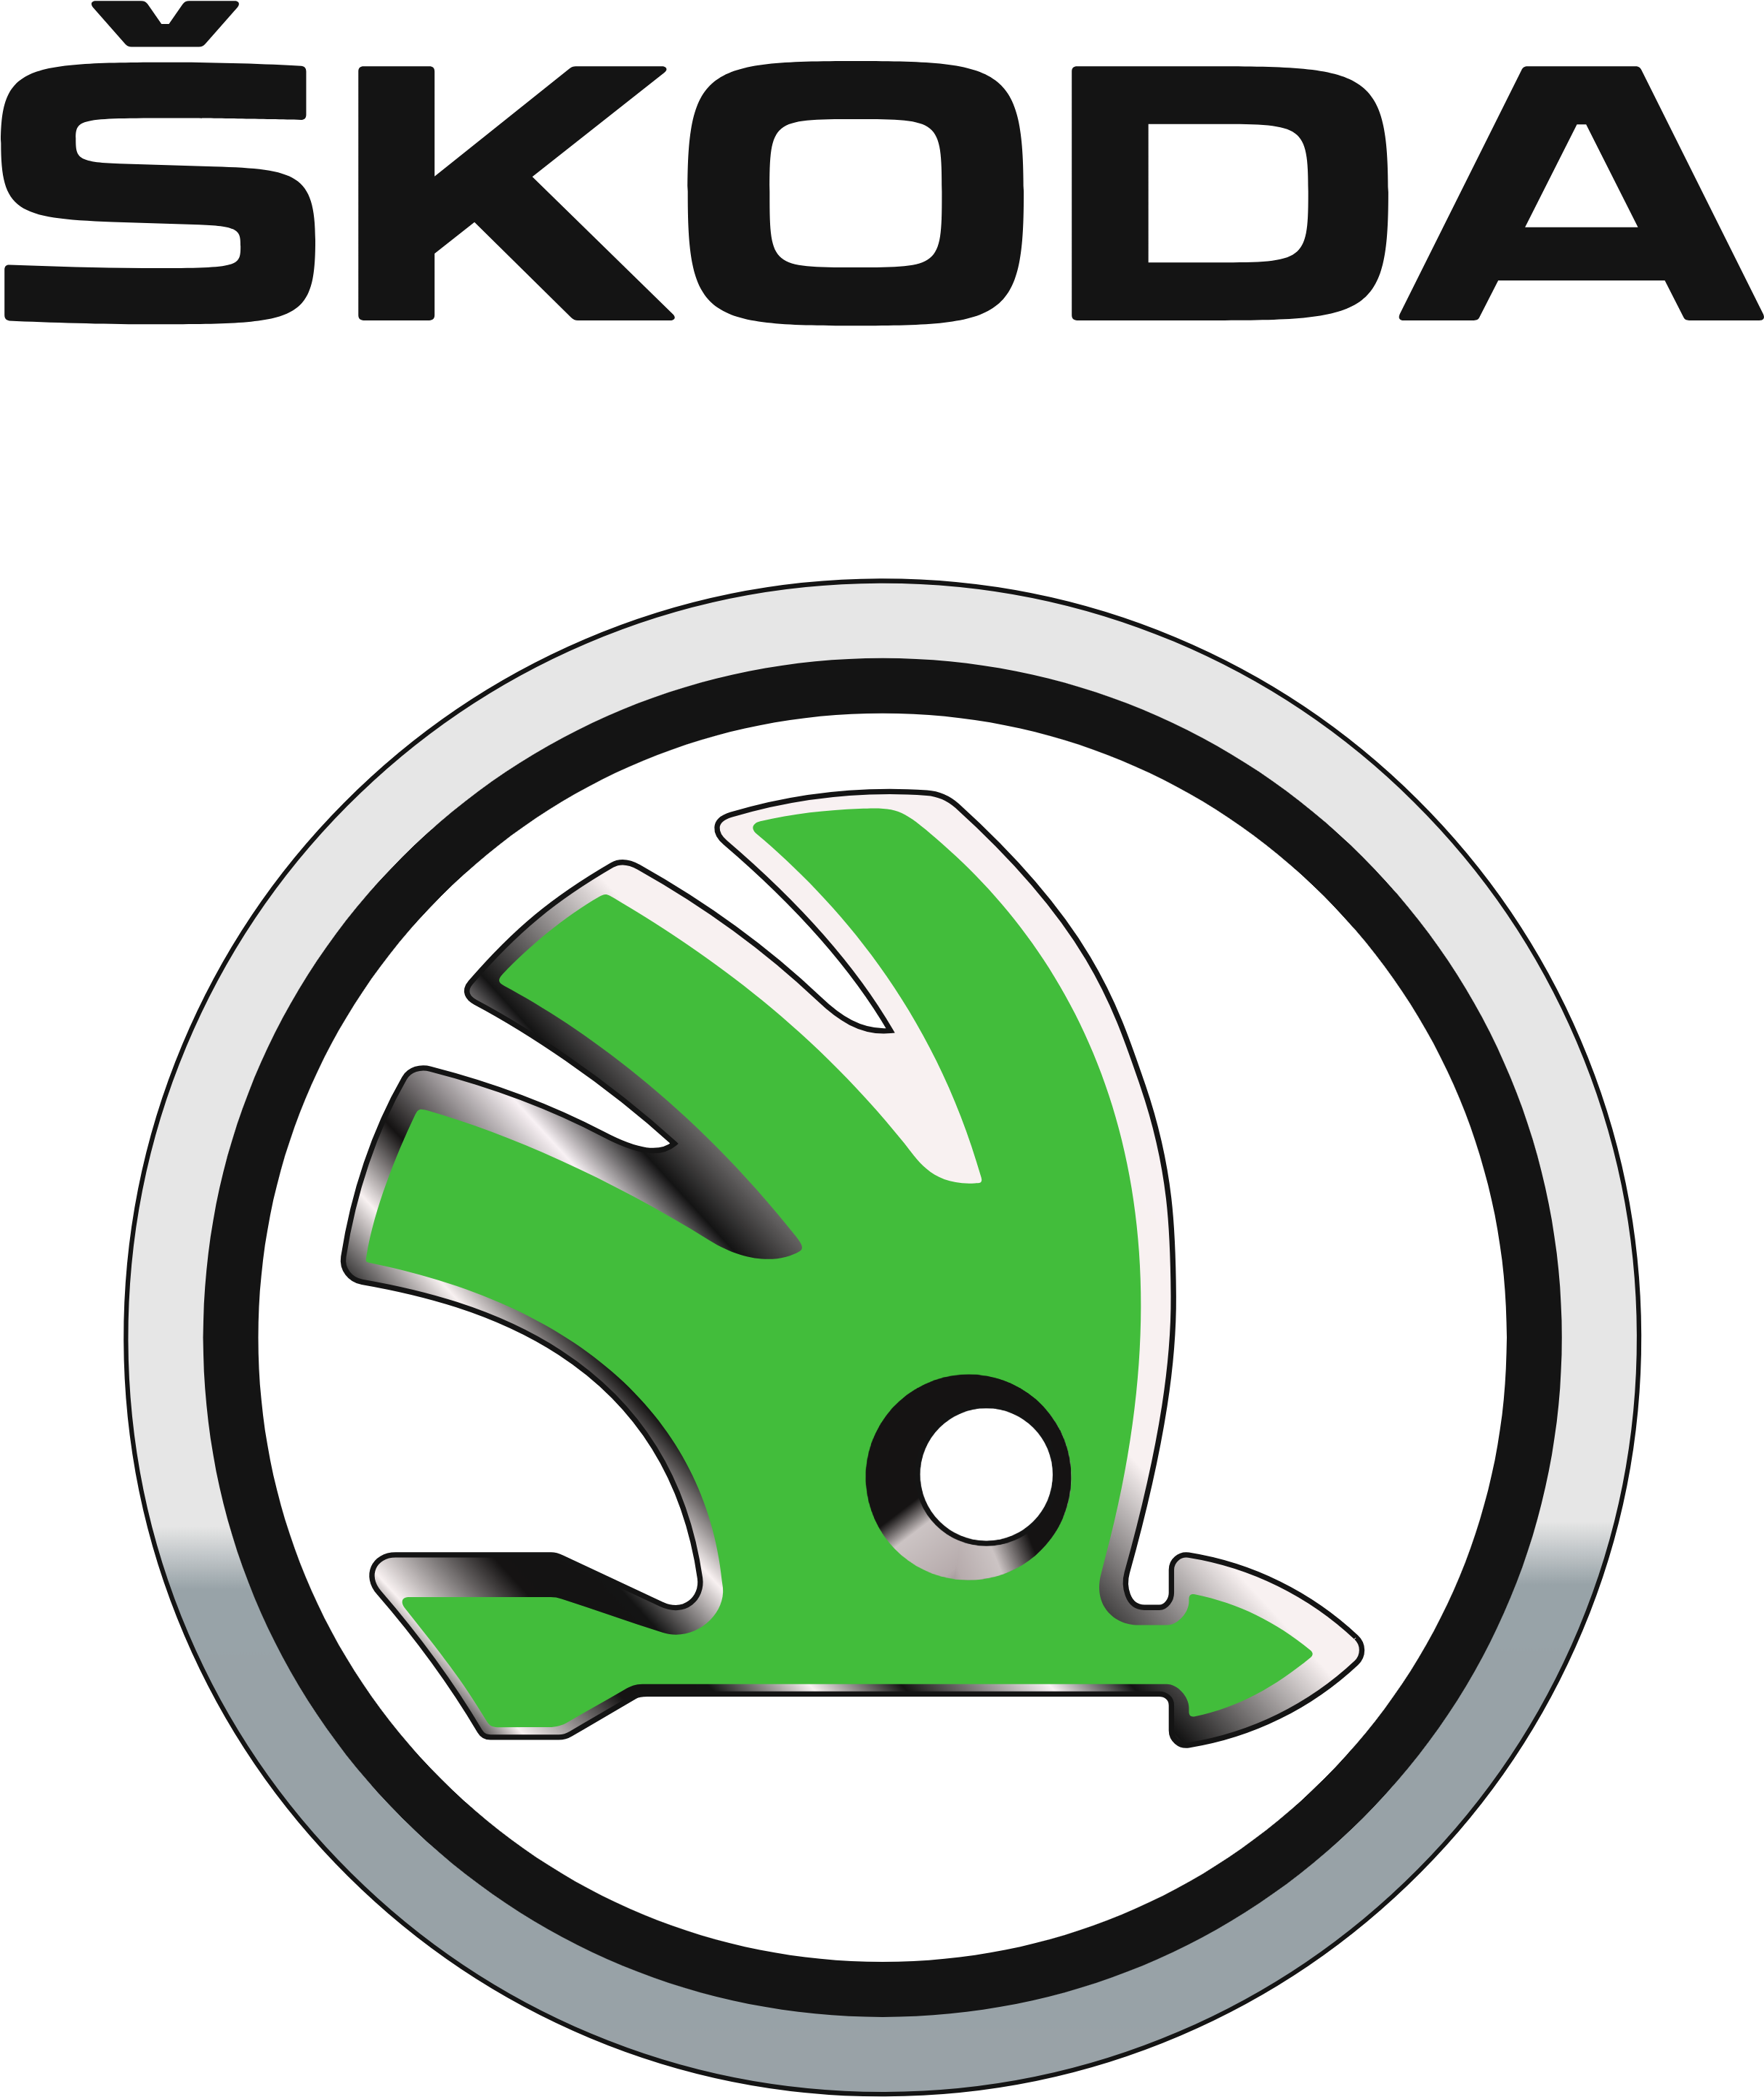 Skoda &ndash Logos Download - Skoda Logo Vector 2018 Clipart (5000x2886), Png Download